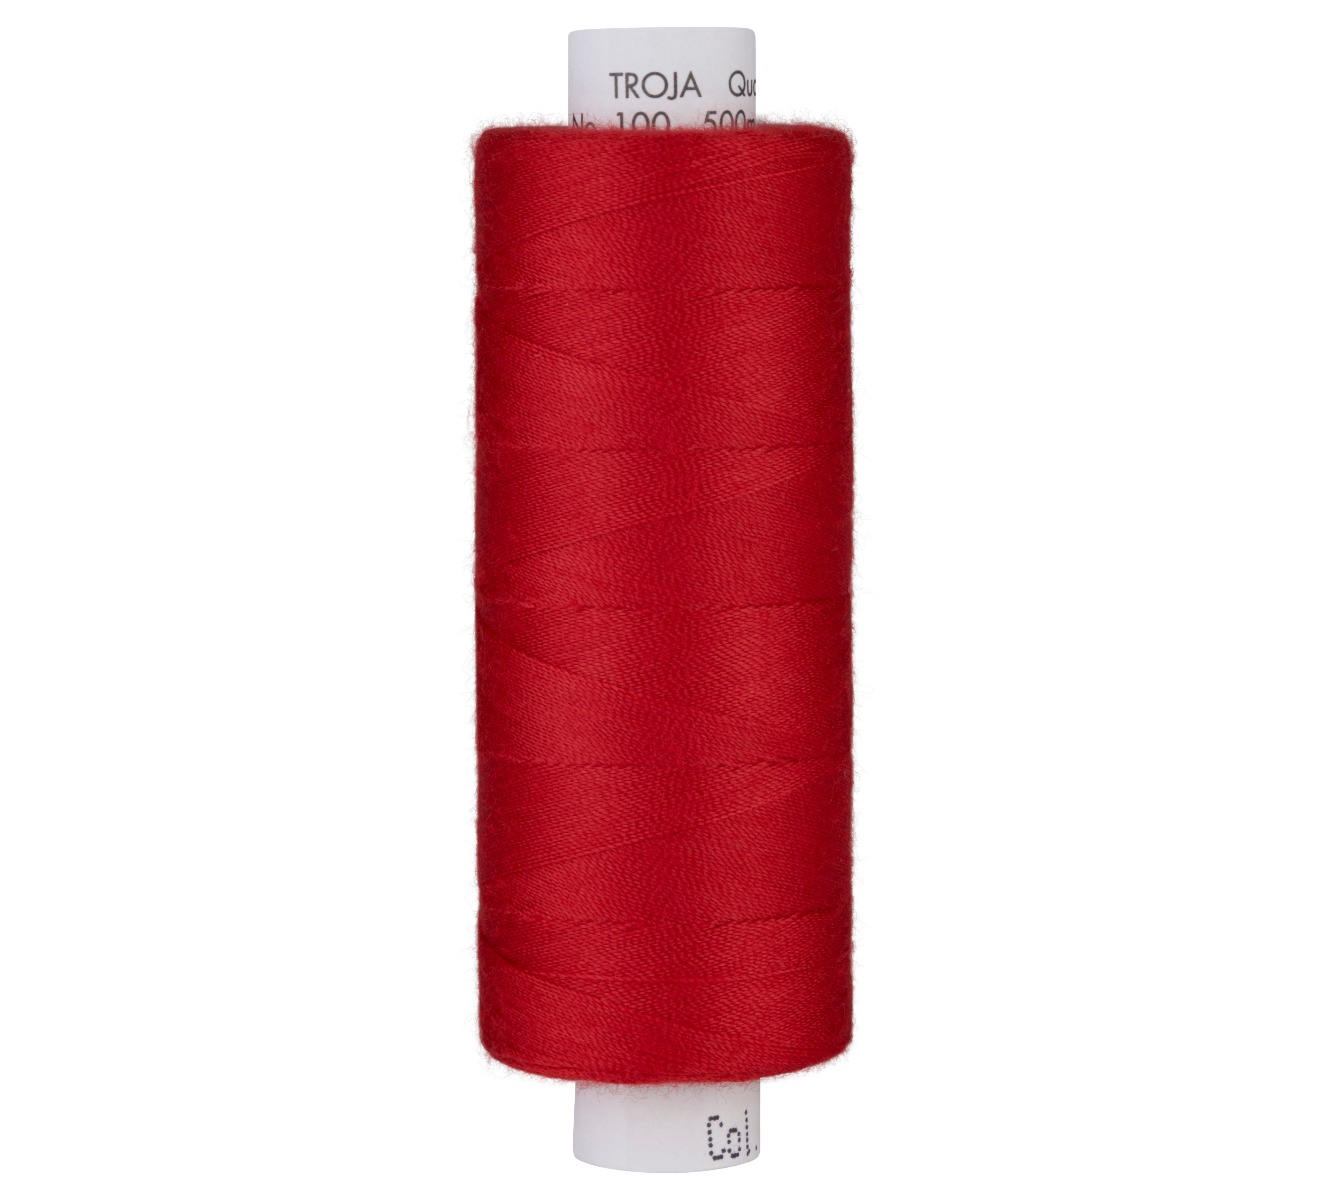 Troja Qualitätsnähgarn 500 m Rot Farbe 0504